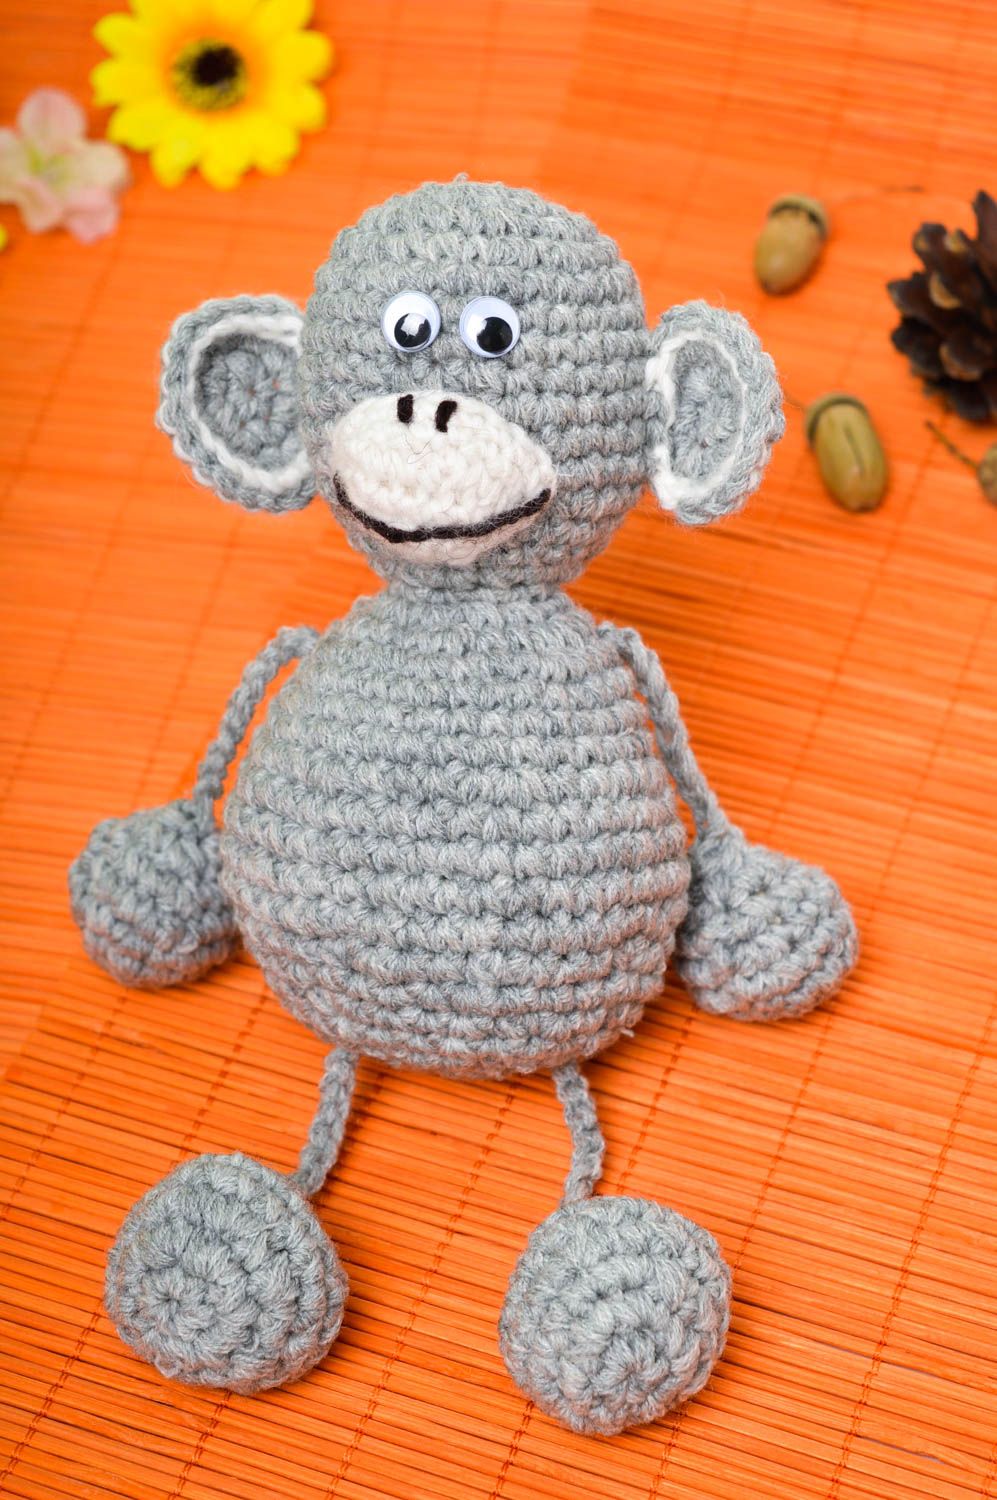 Crocheted toy stuffed toy handmade soft toys for children nursery decor photo 1